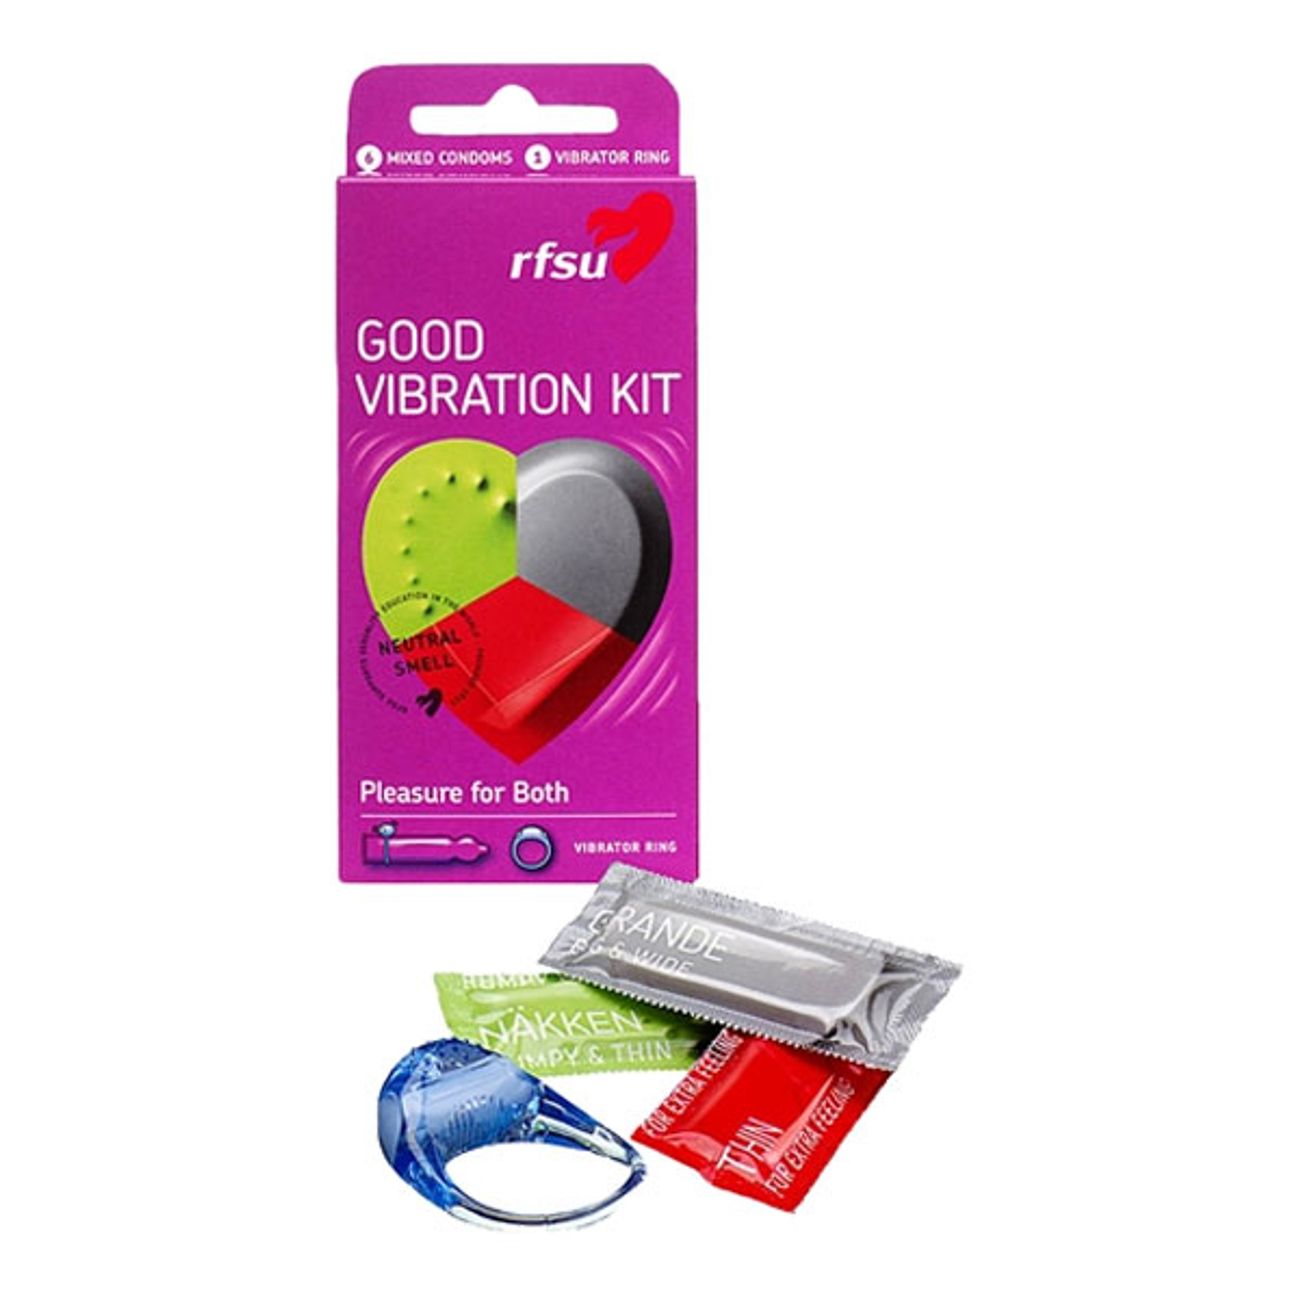 rfsu-good-vibration-kit2-1